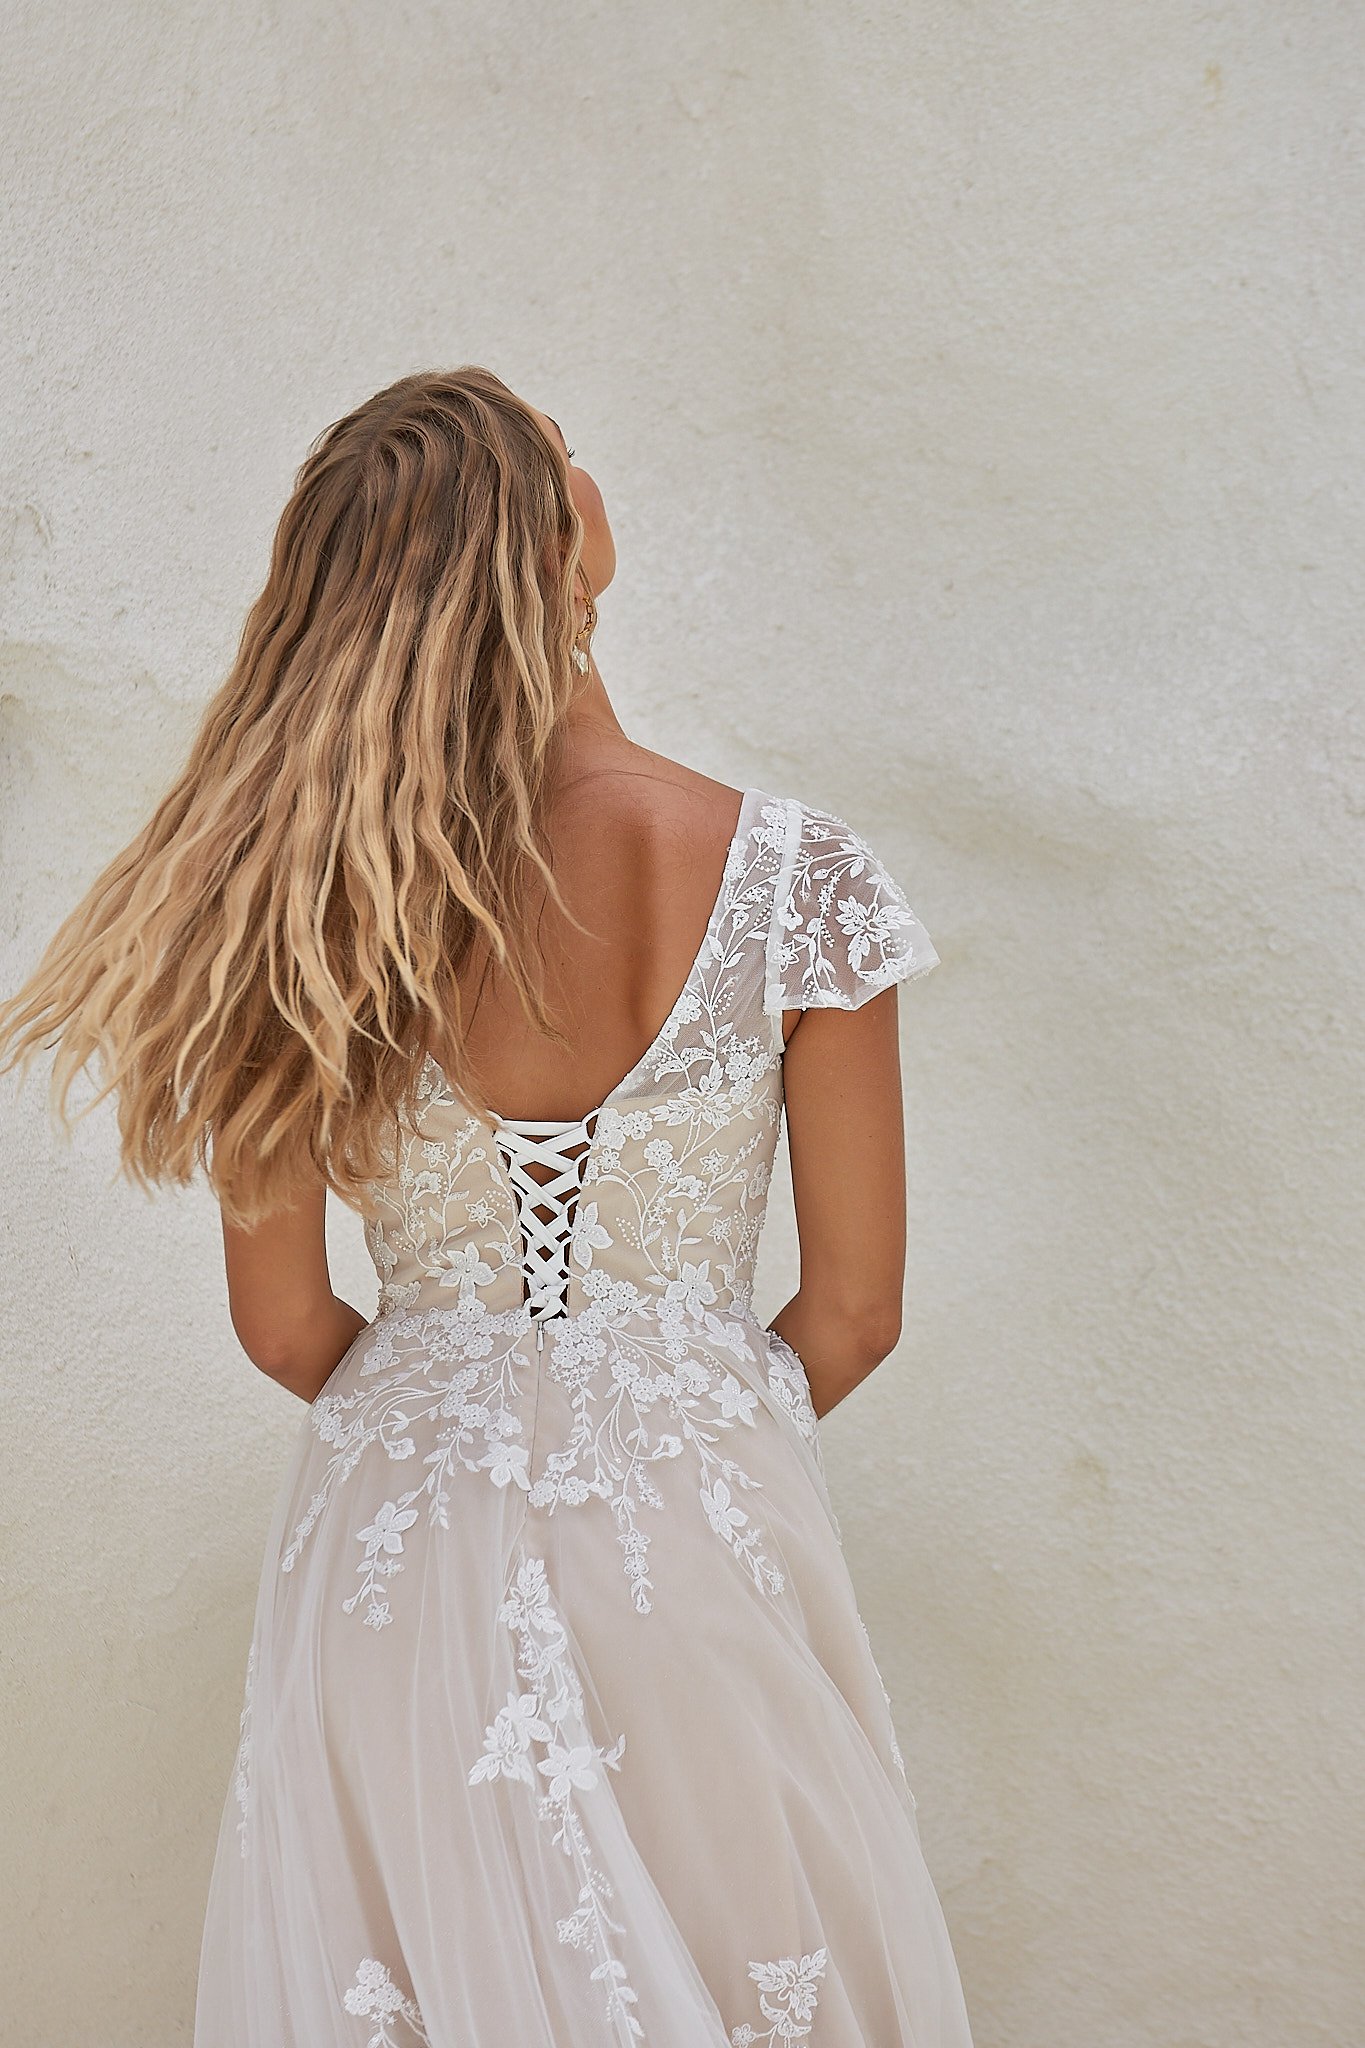 Lace plus size wedding dress.jpg